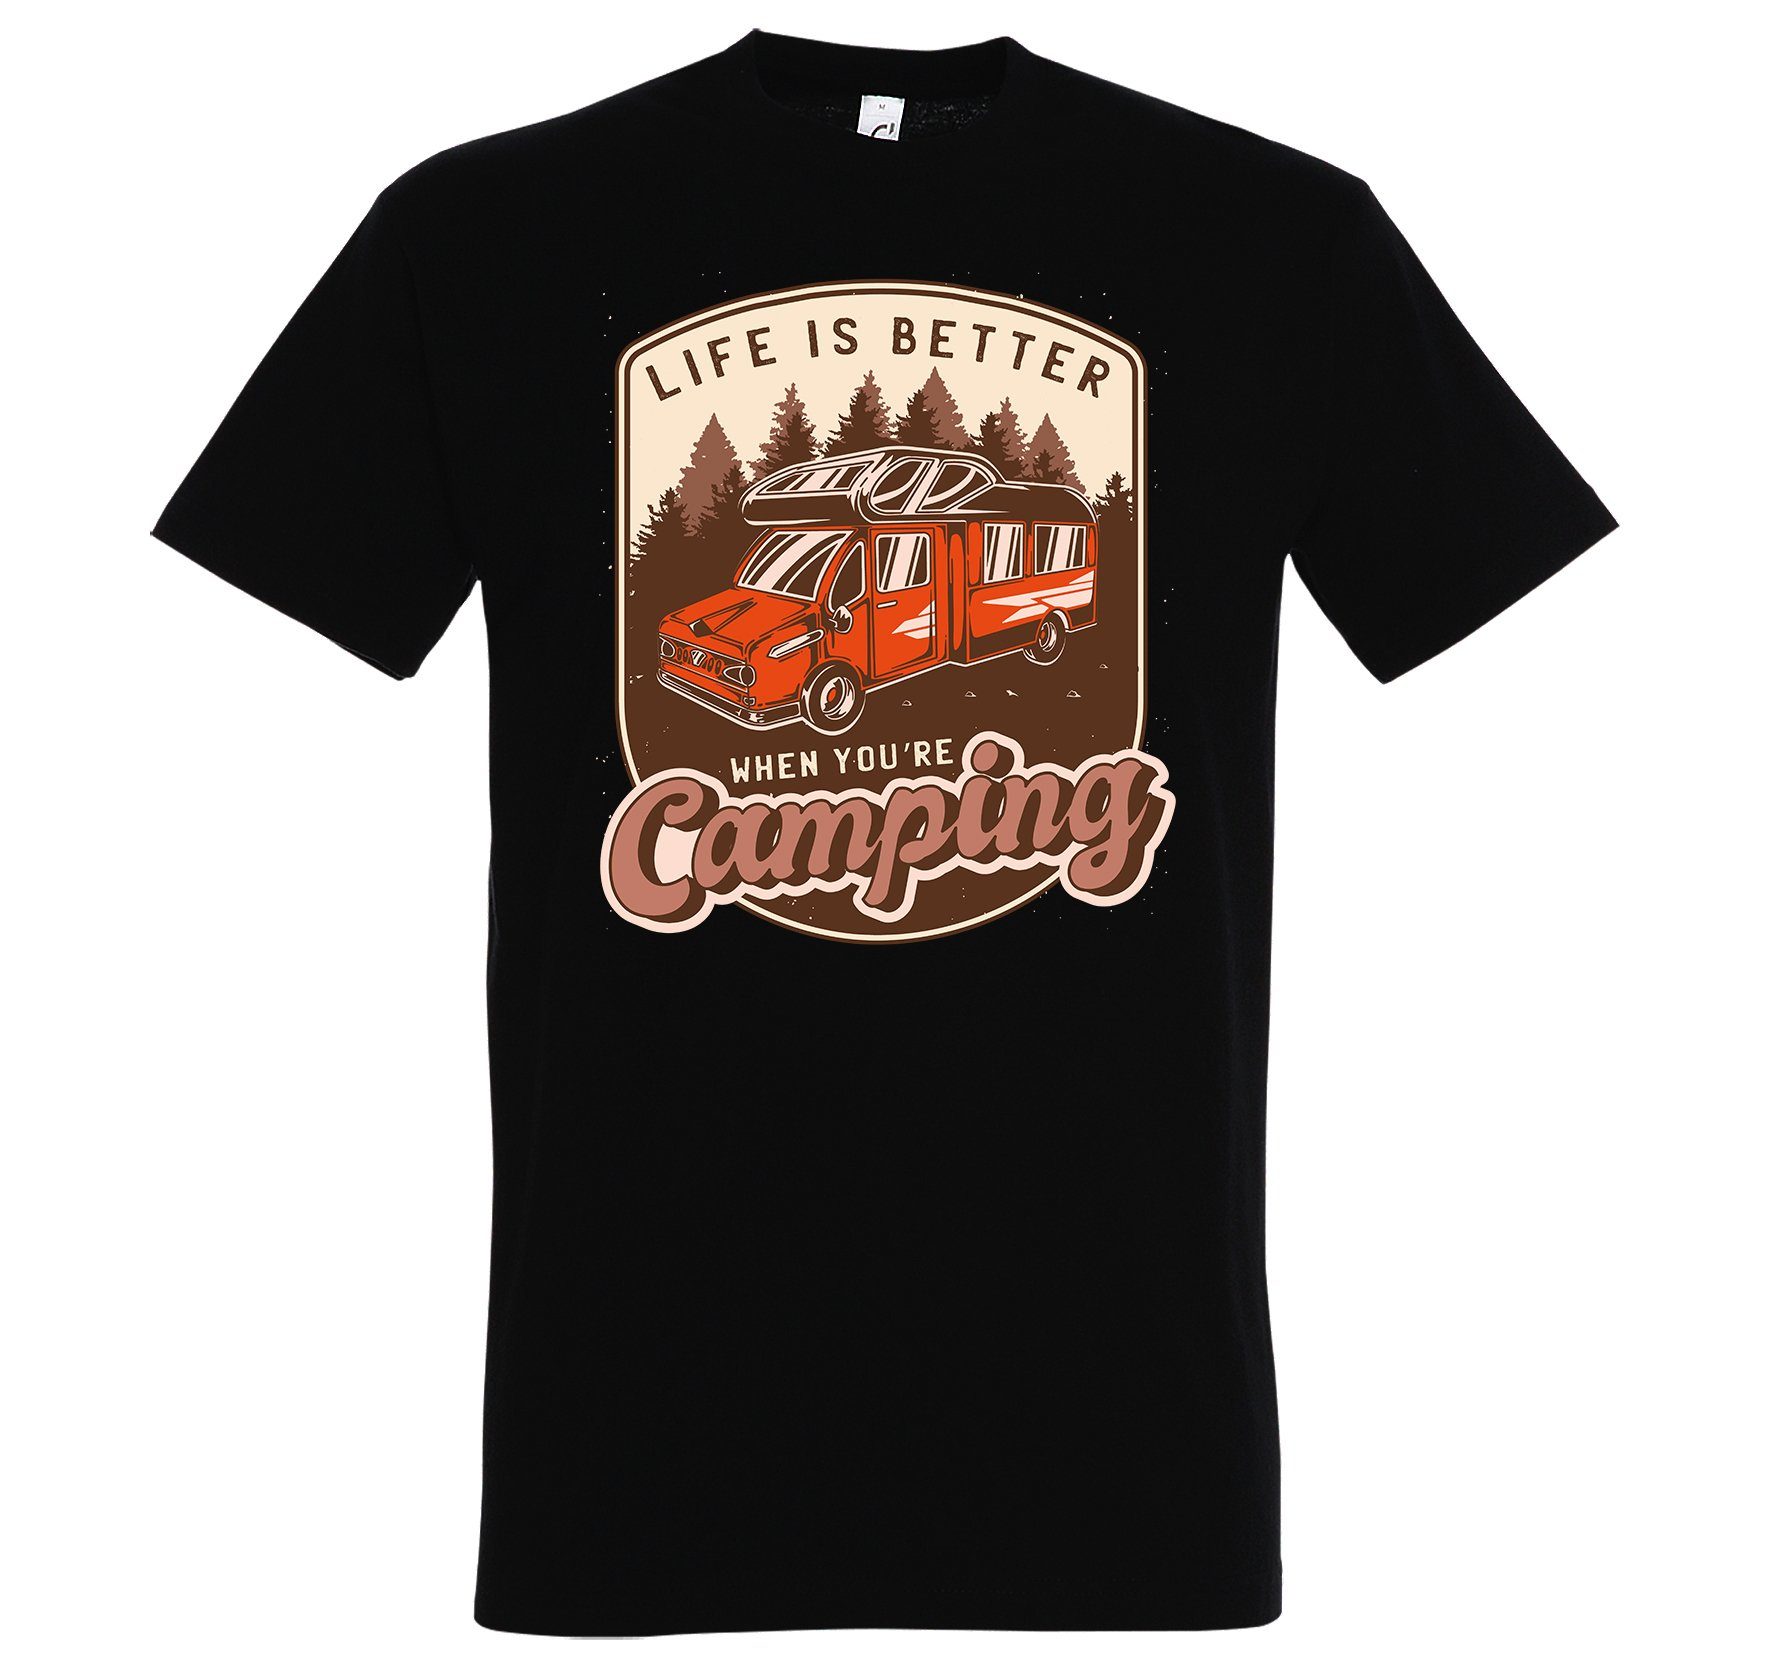 Youth Schwarz lustigem Camping Life Designz Shirt You´re Frontprint Better Is When T-Shirt mit Herren